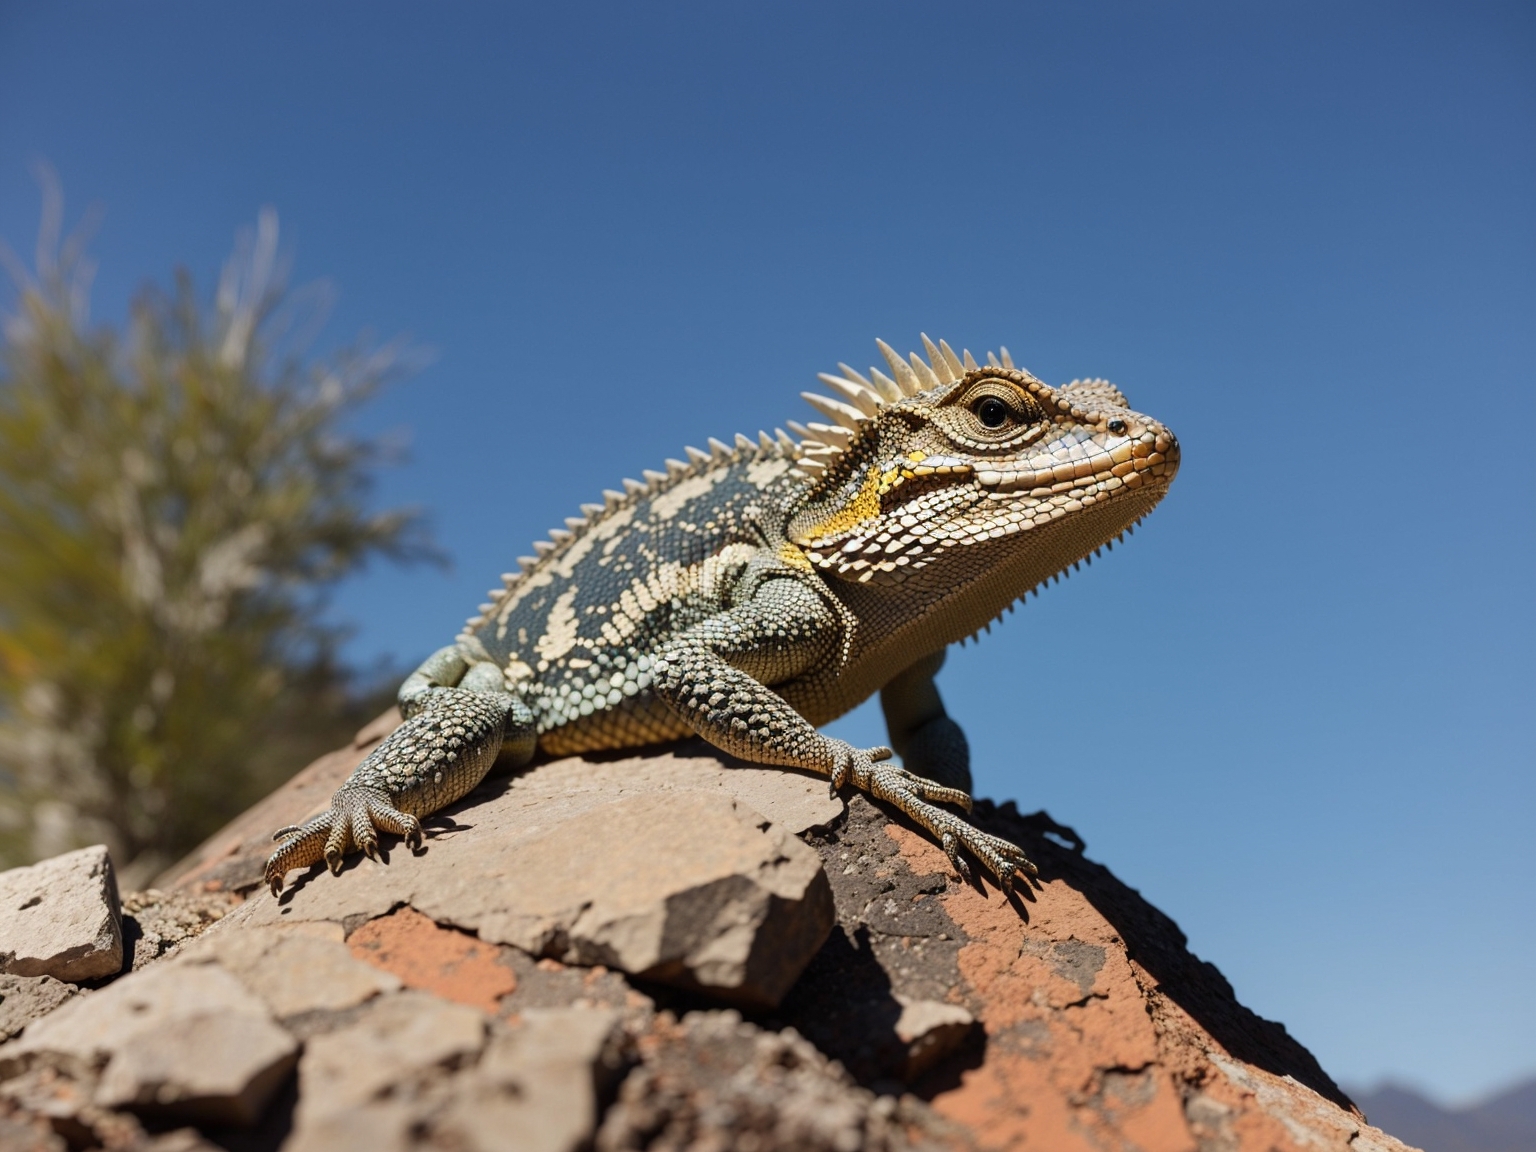 how long does a lizard live? Backyard lizard on a rock surveying its domain